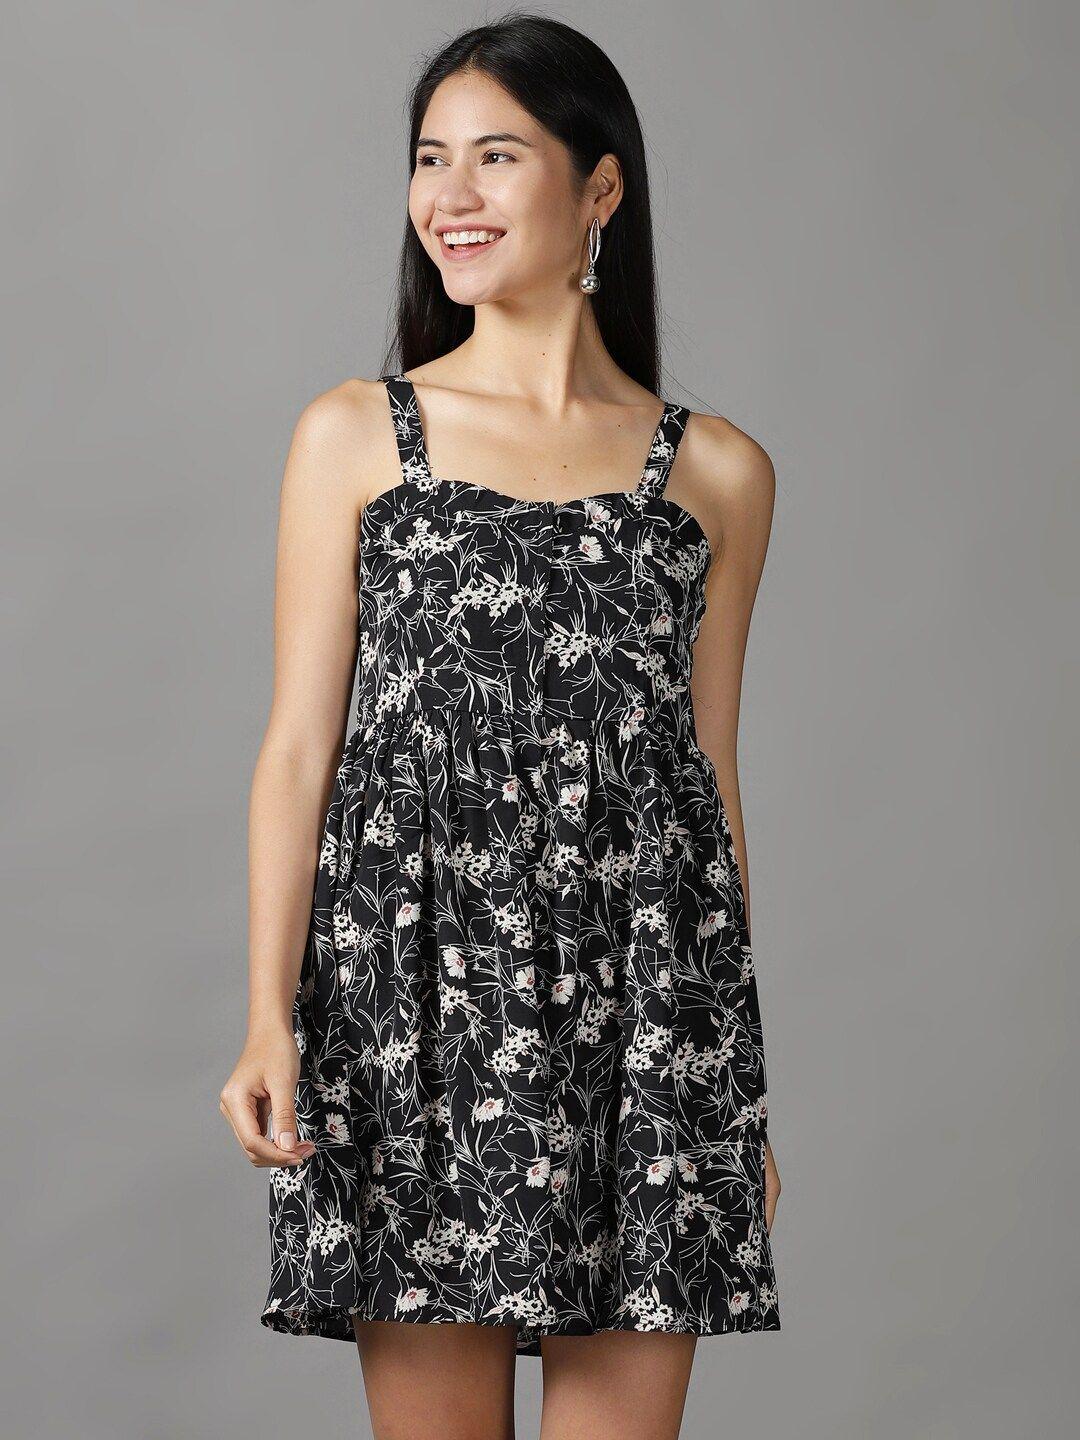 showoff-women-black-&-white-floral-crepe-dress